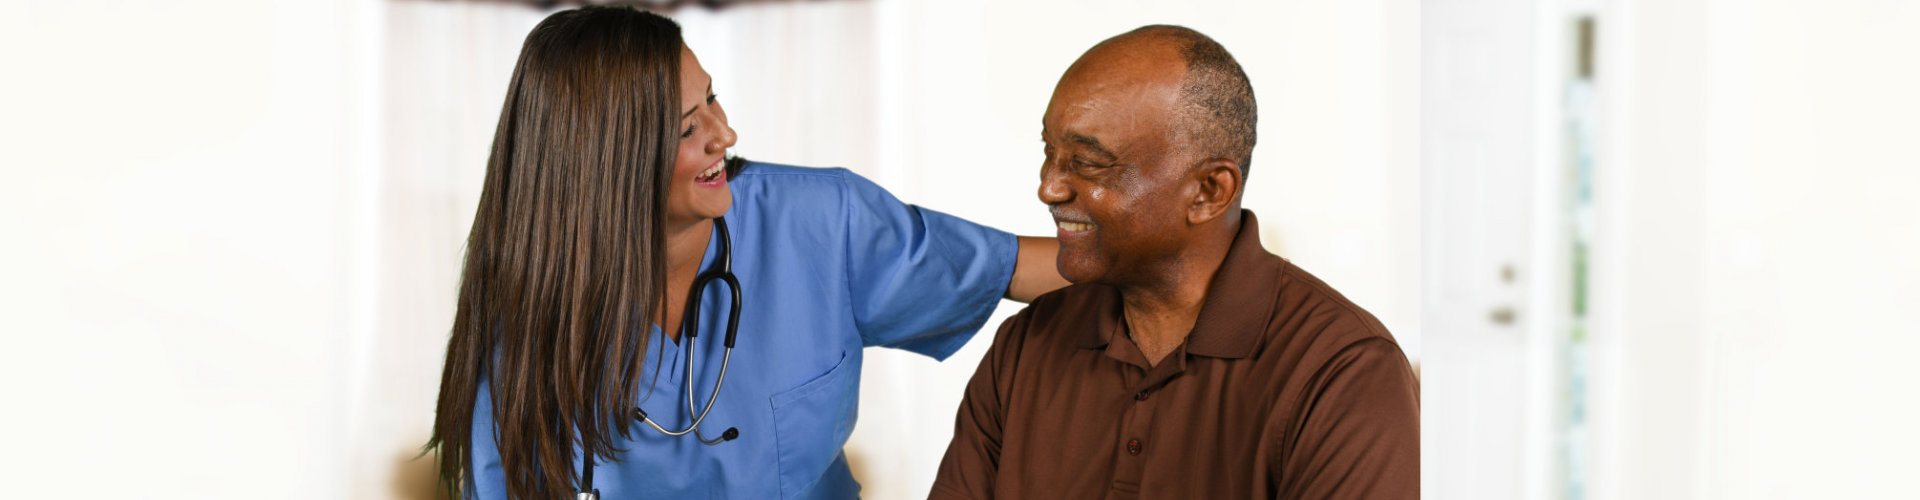 female nurse and senior man smiling